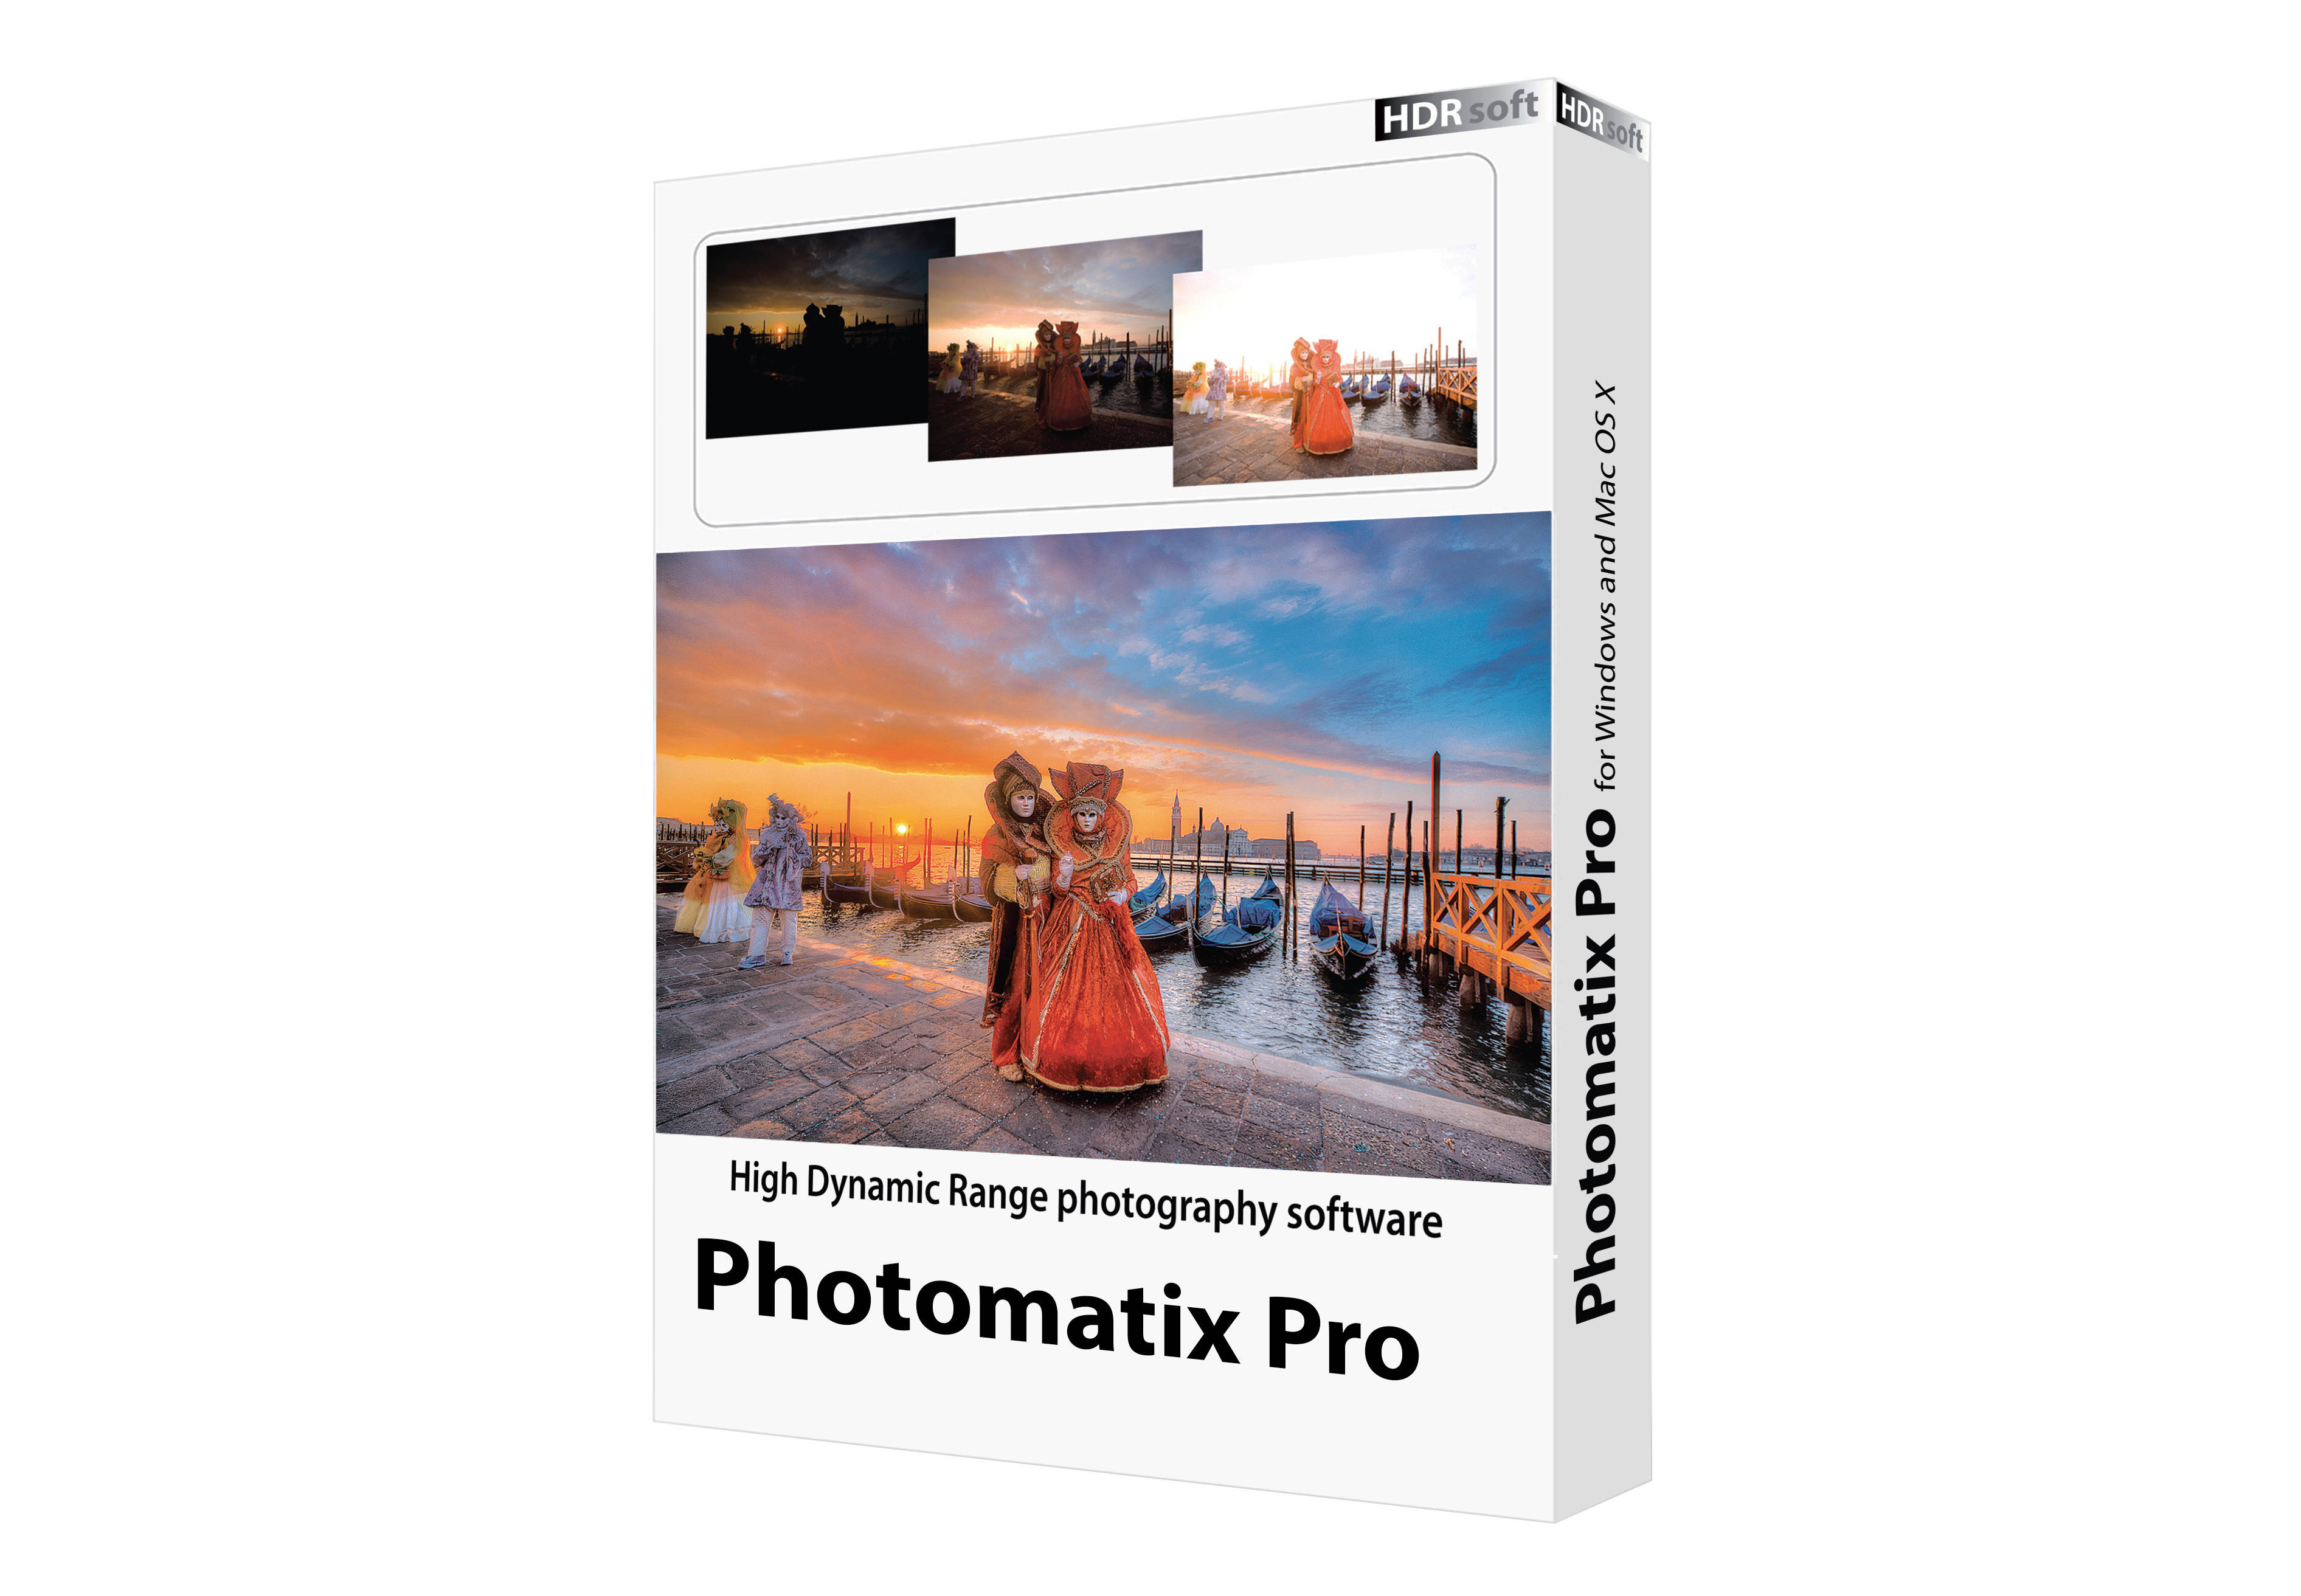 HDR Photomatix Pro 7 CD Key $6.77